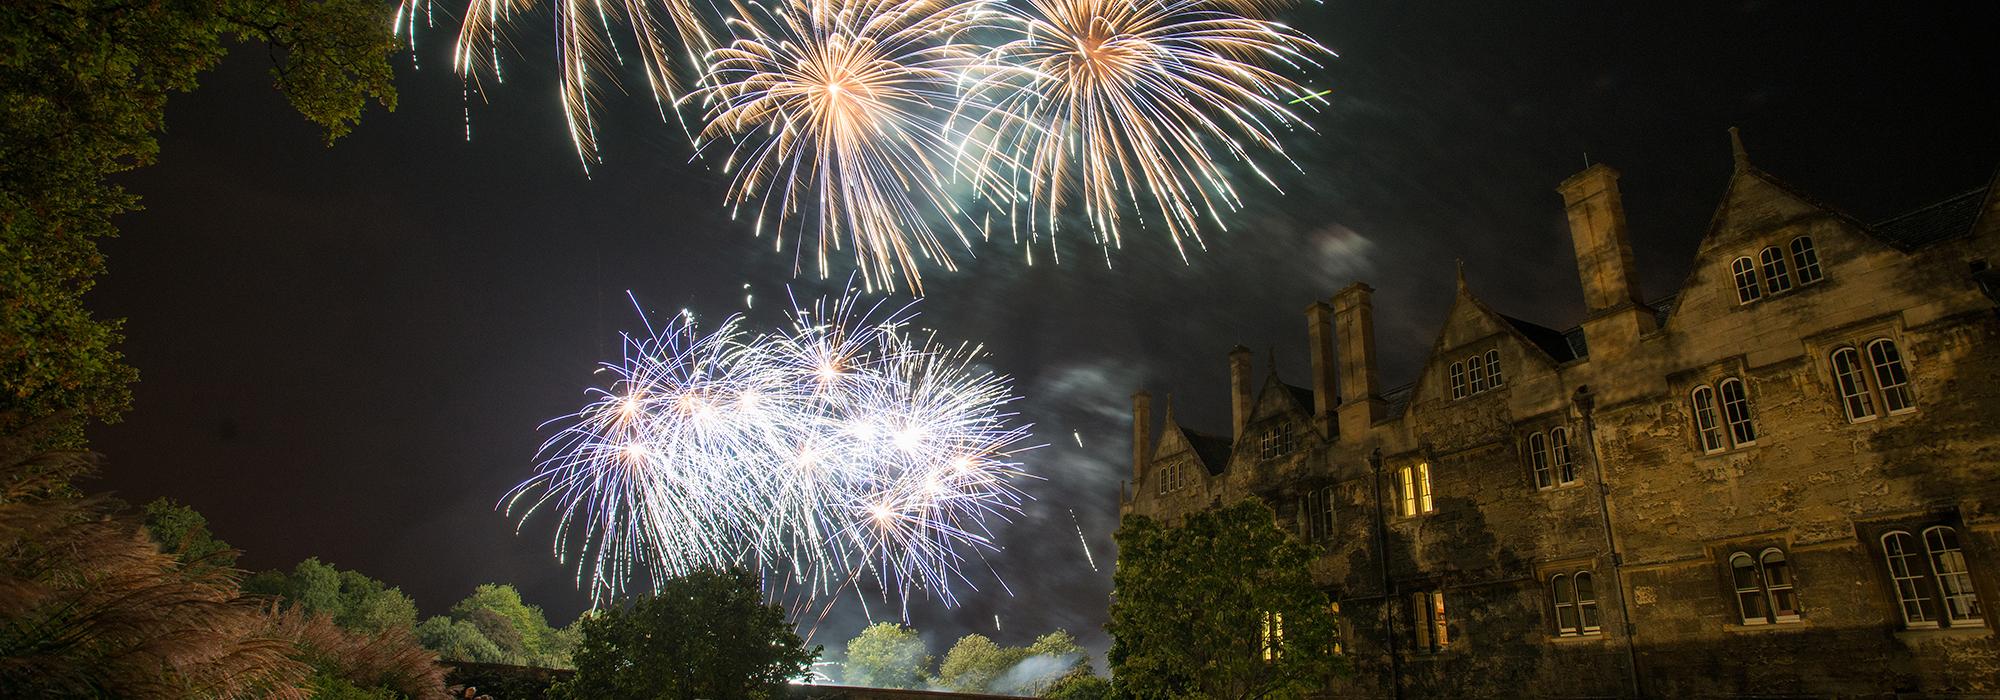 Fireworks burst over Fellows' Garden during the 750th Anniversary weekend, September 2014 - Photo: © John Cairns - www.johncairns.co.uk